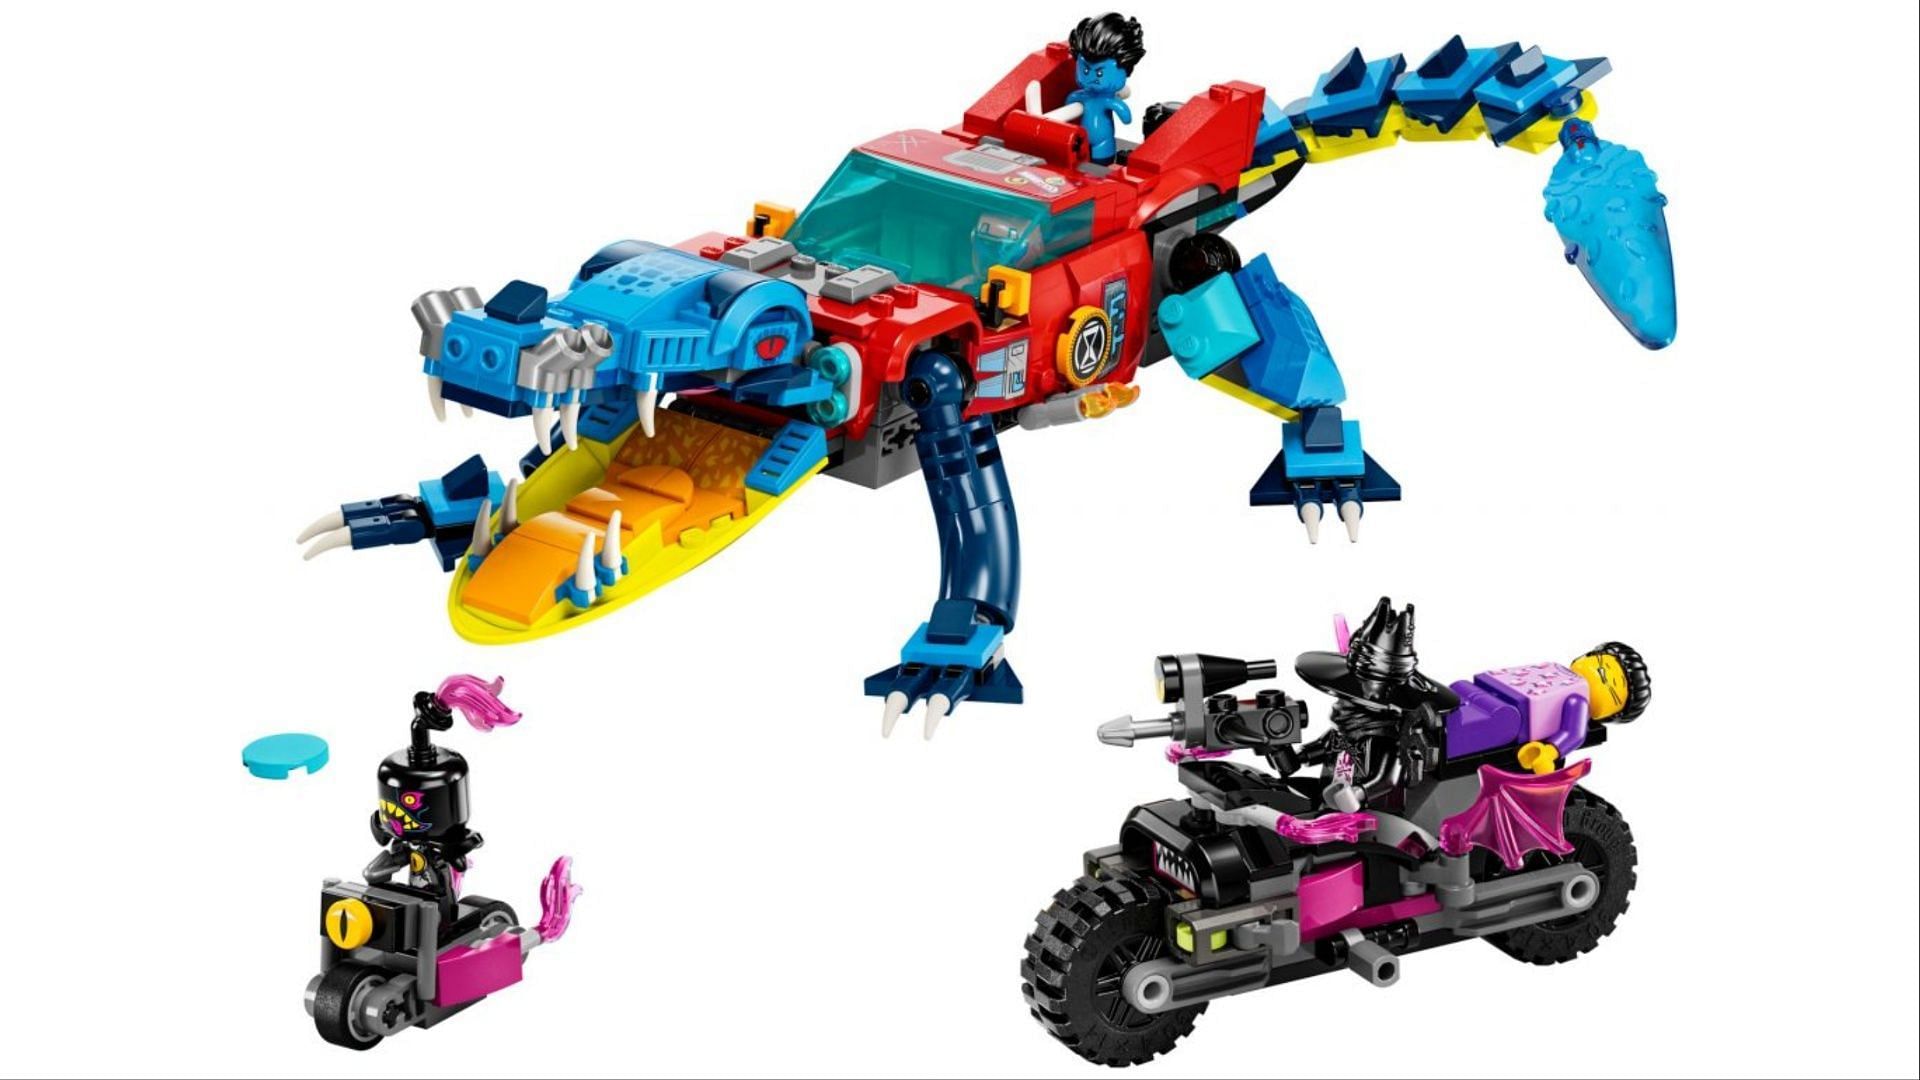 DREAMZzz Crocodile Car (Image via LEGO)